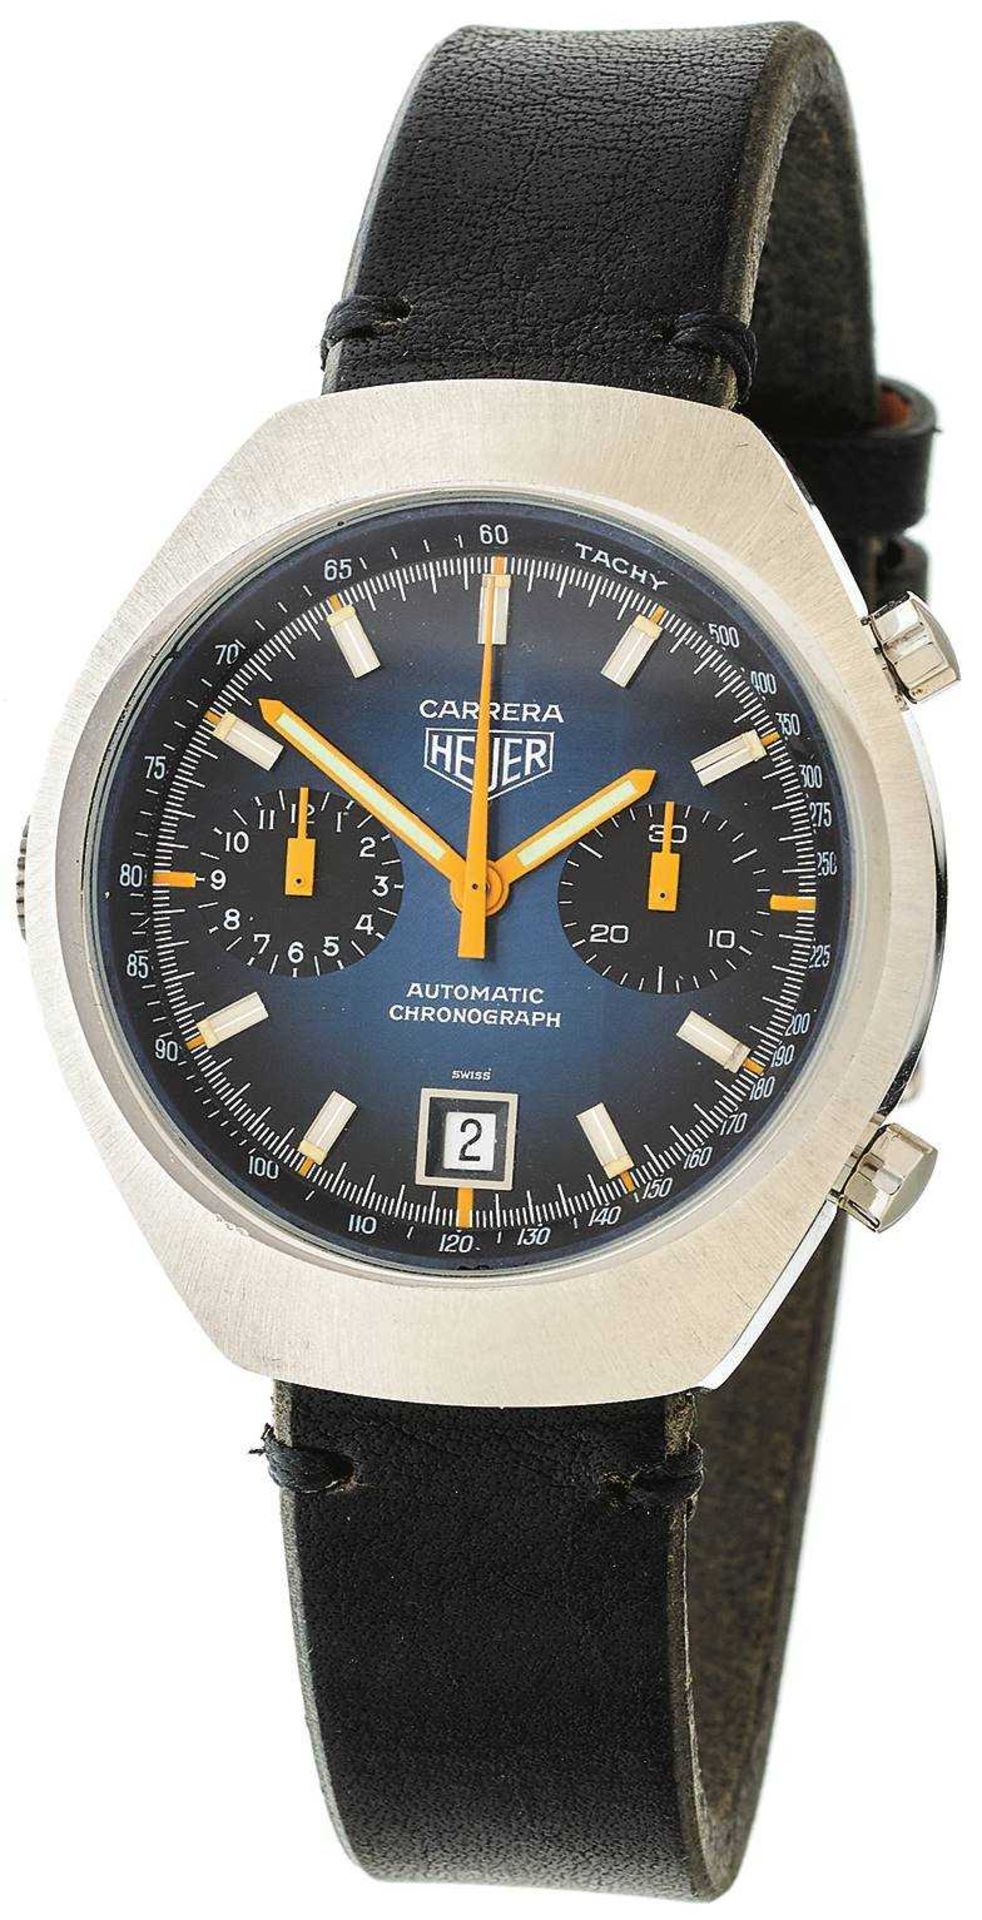 Herren Armband Uhr \Carrera Heuer\ Chronograph. Ca. 38mm, um 1975, Edelstahlgehäuse Nr. 110573,  Ank